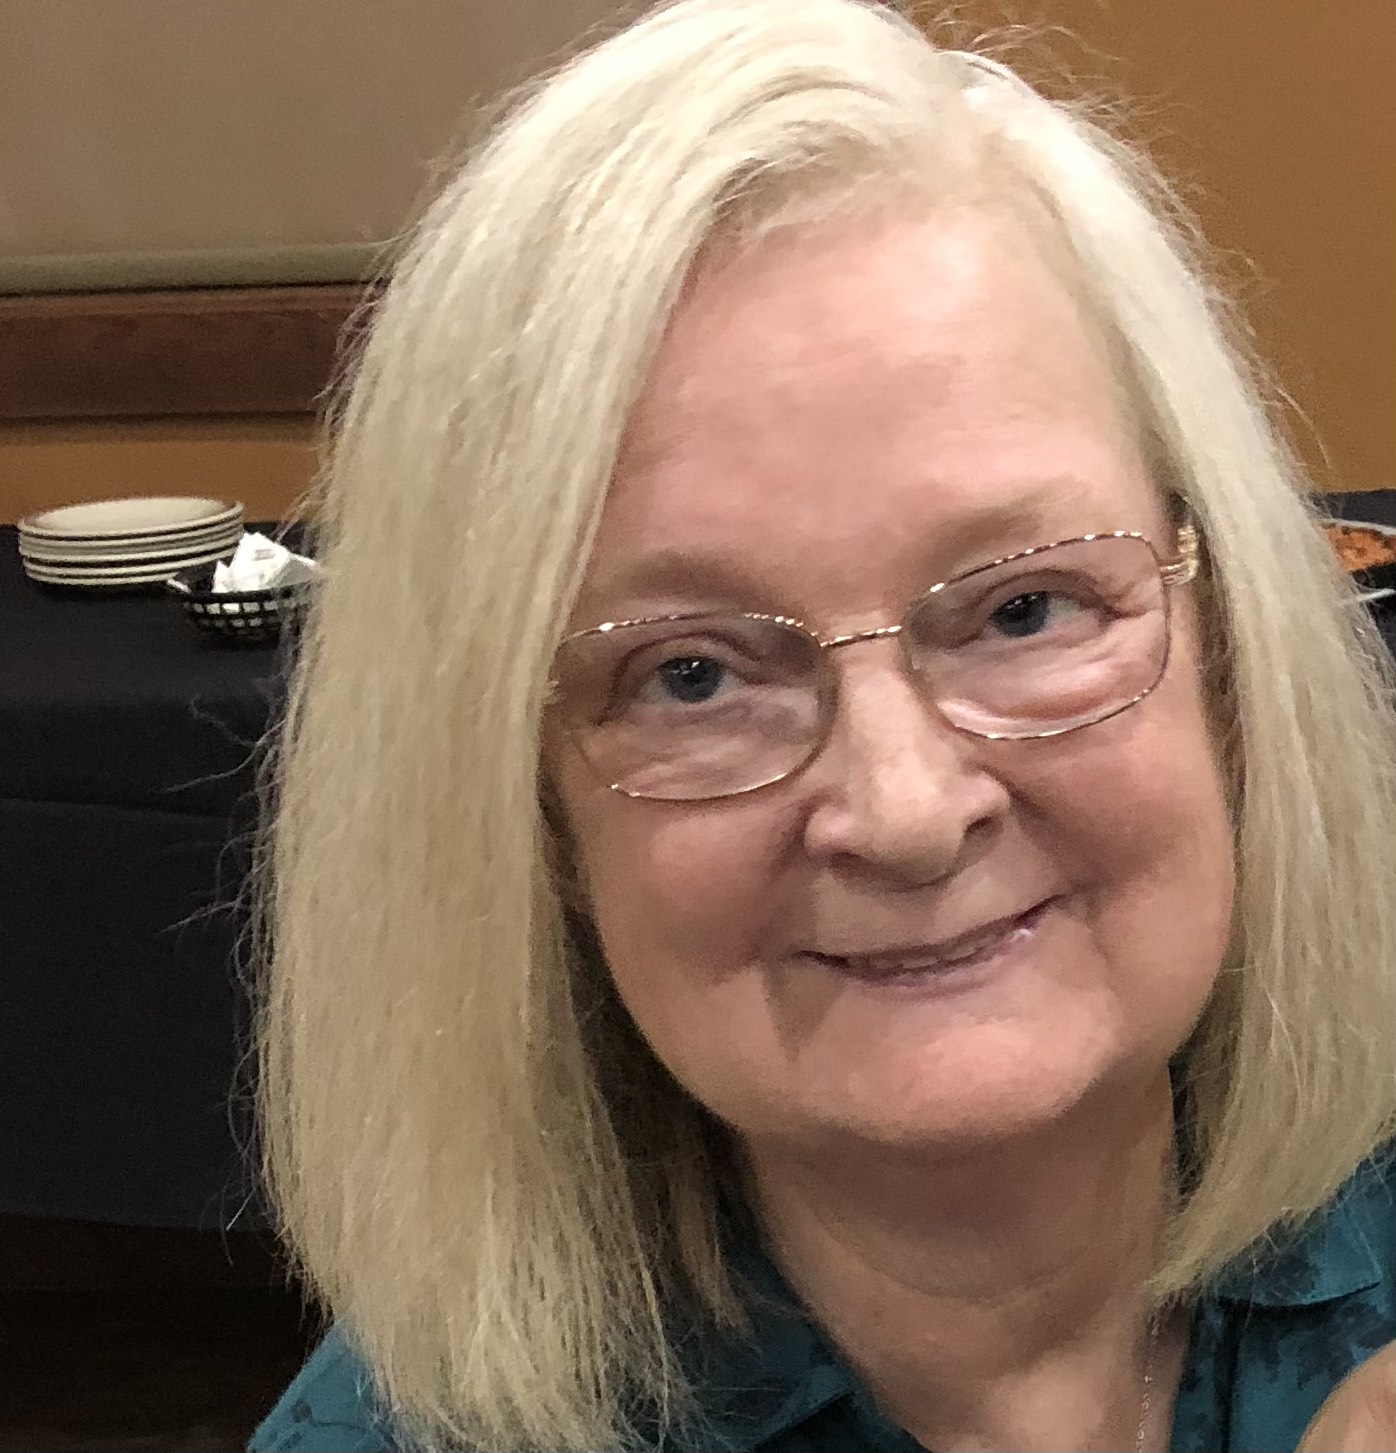 Diane M. Dethmann – 72